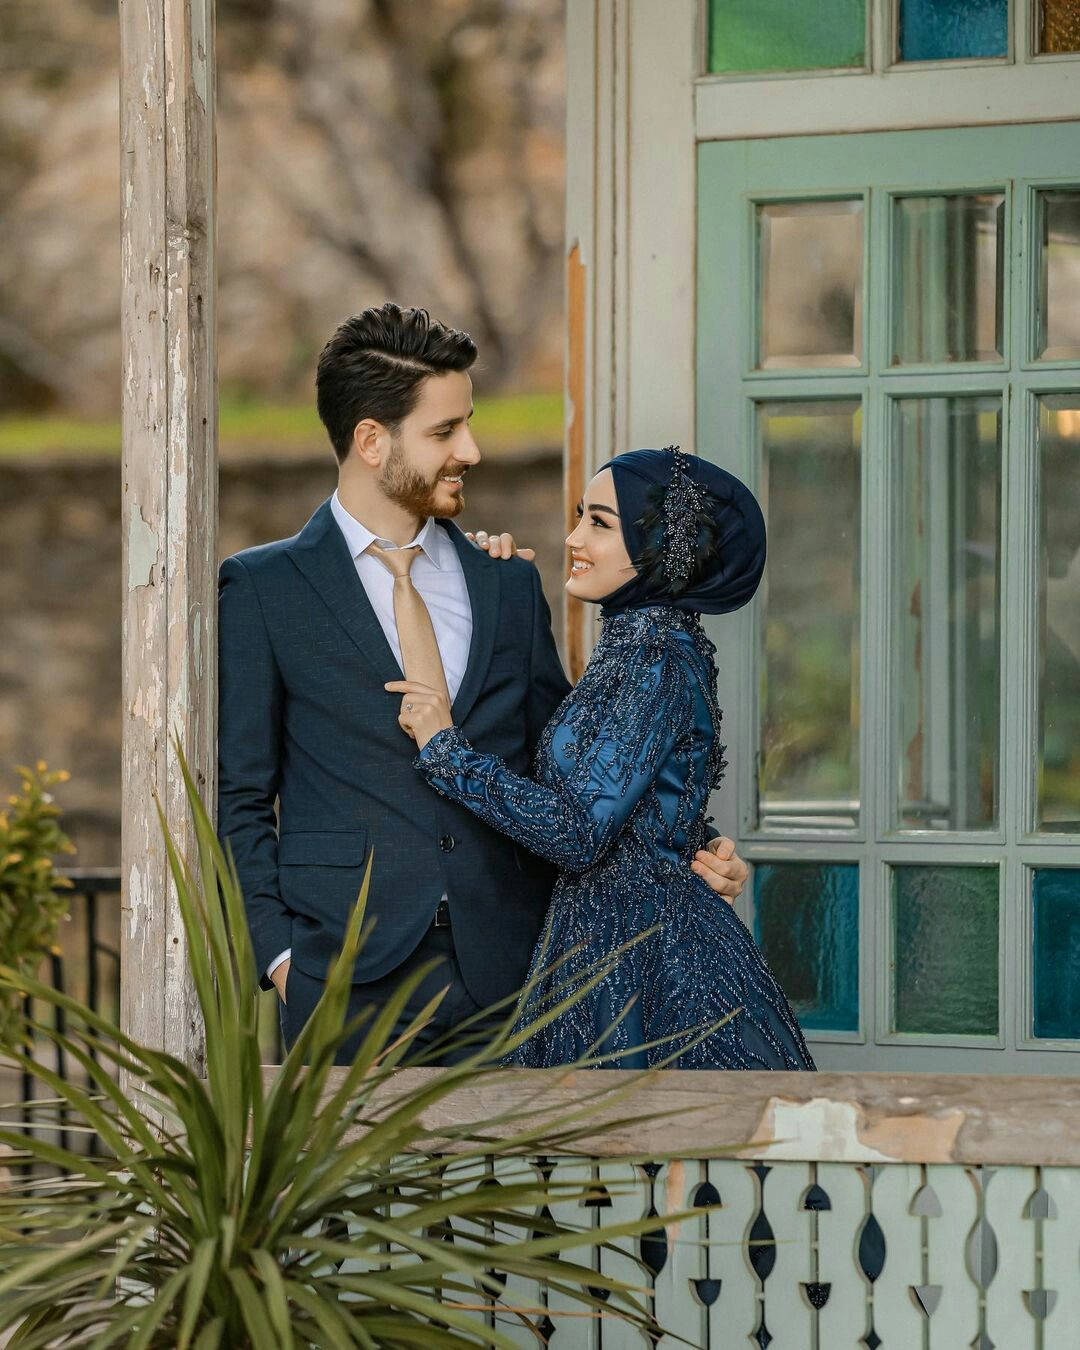 Download Muslim Couple At Veranda Photoshoot Wallpaper ...